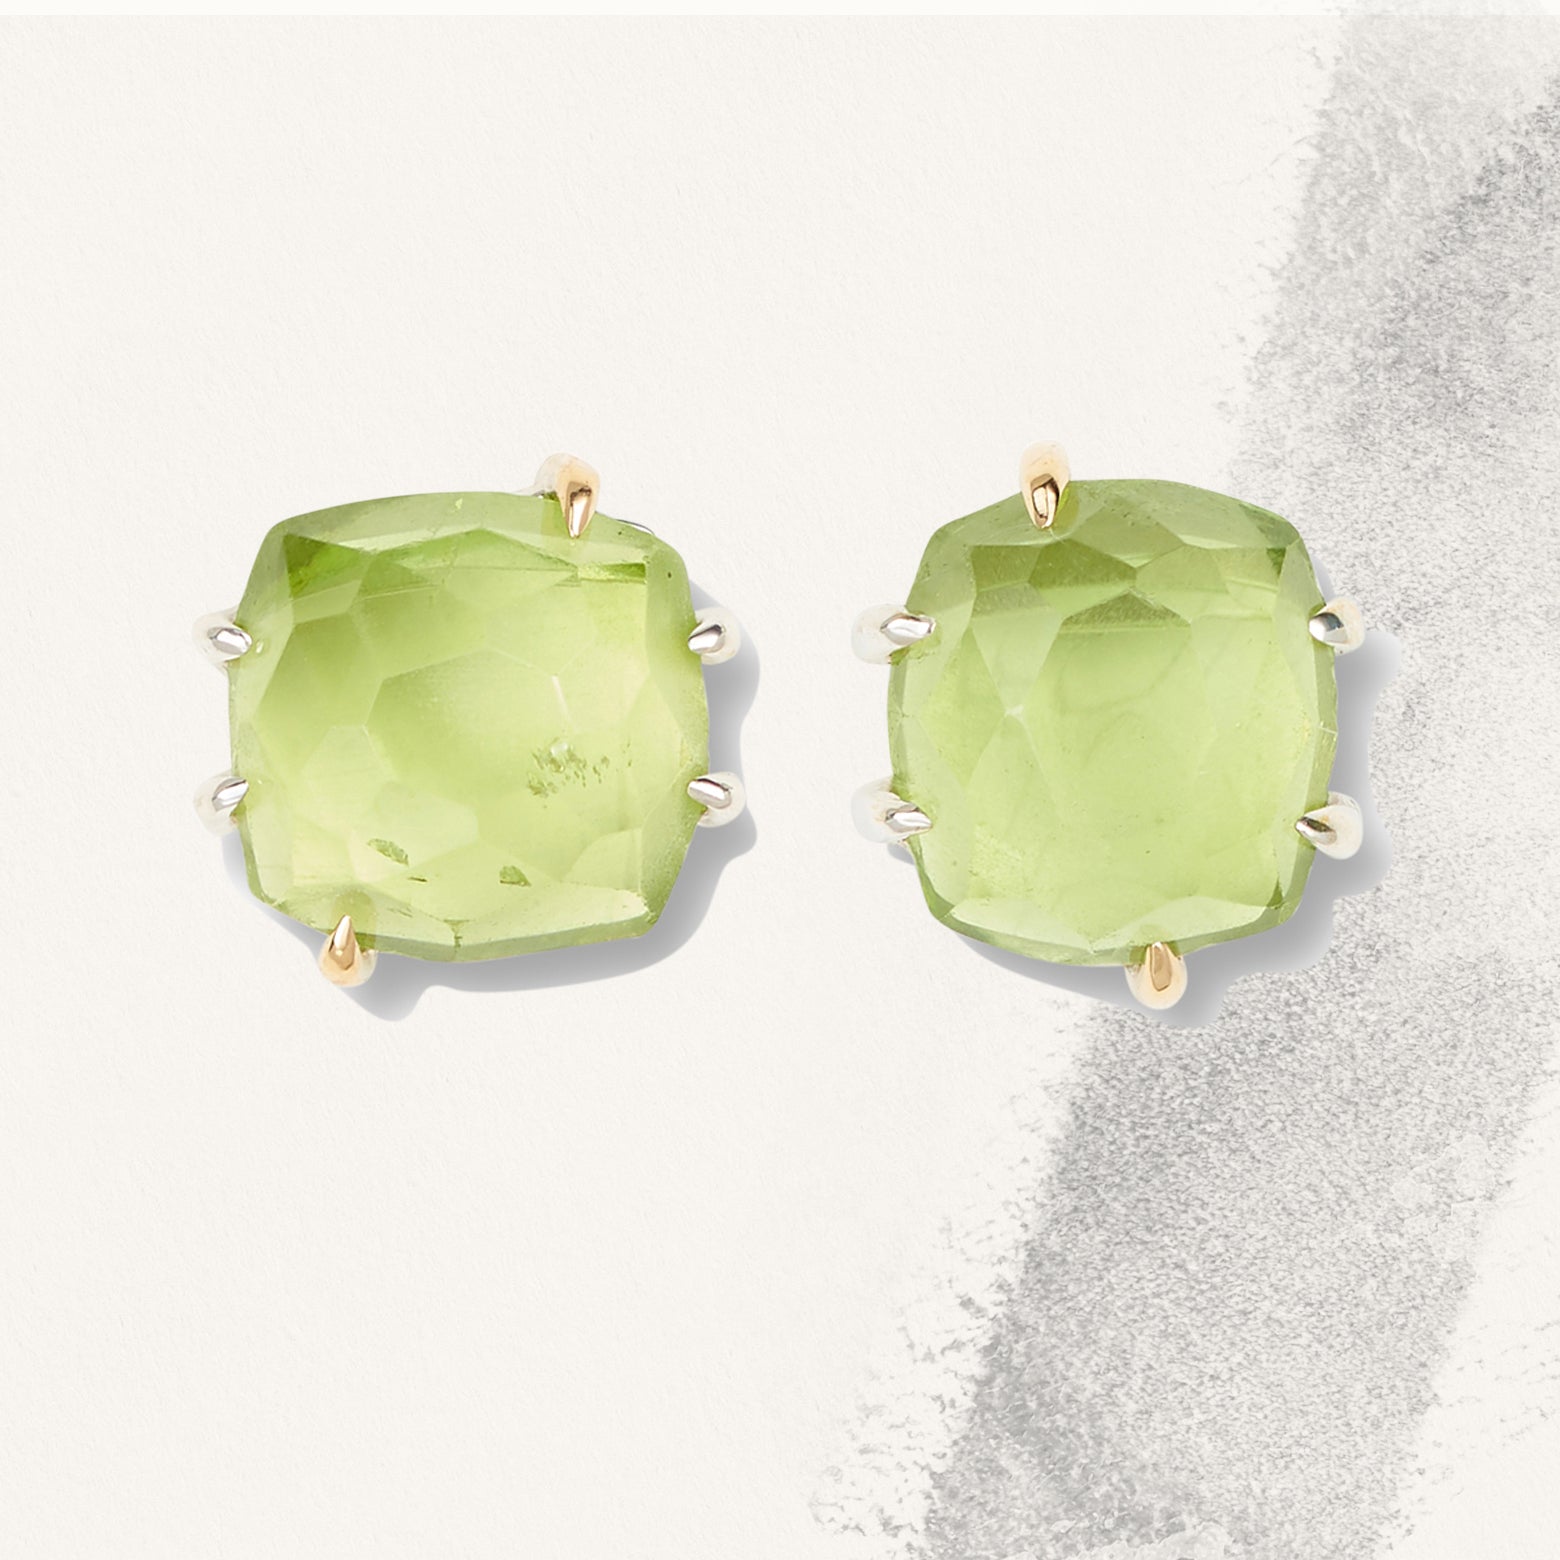 Green peridot stud earrings